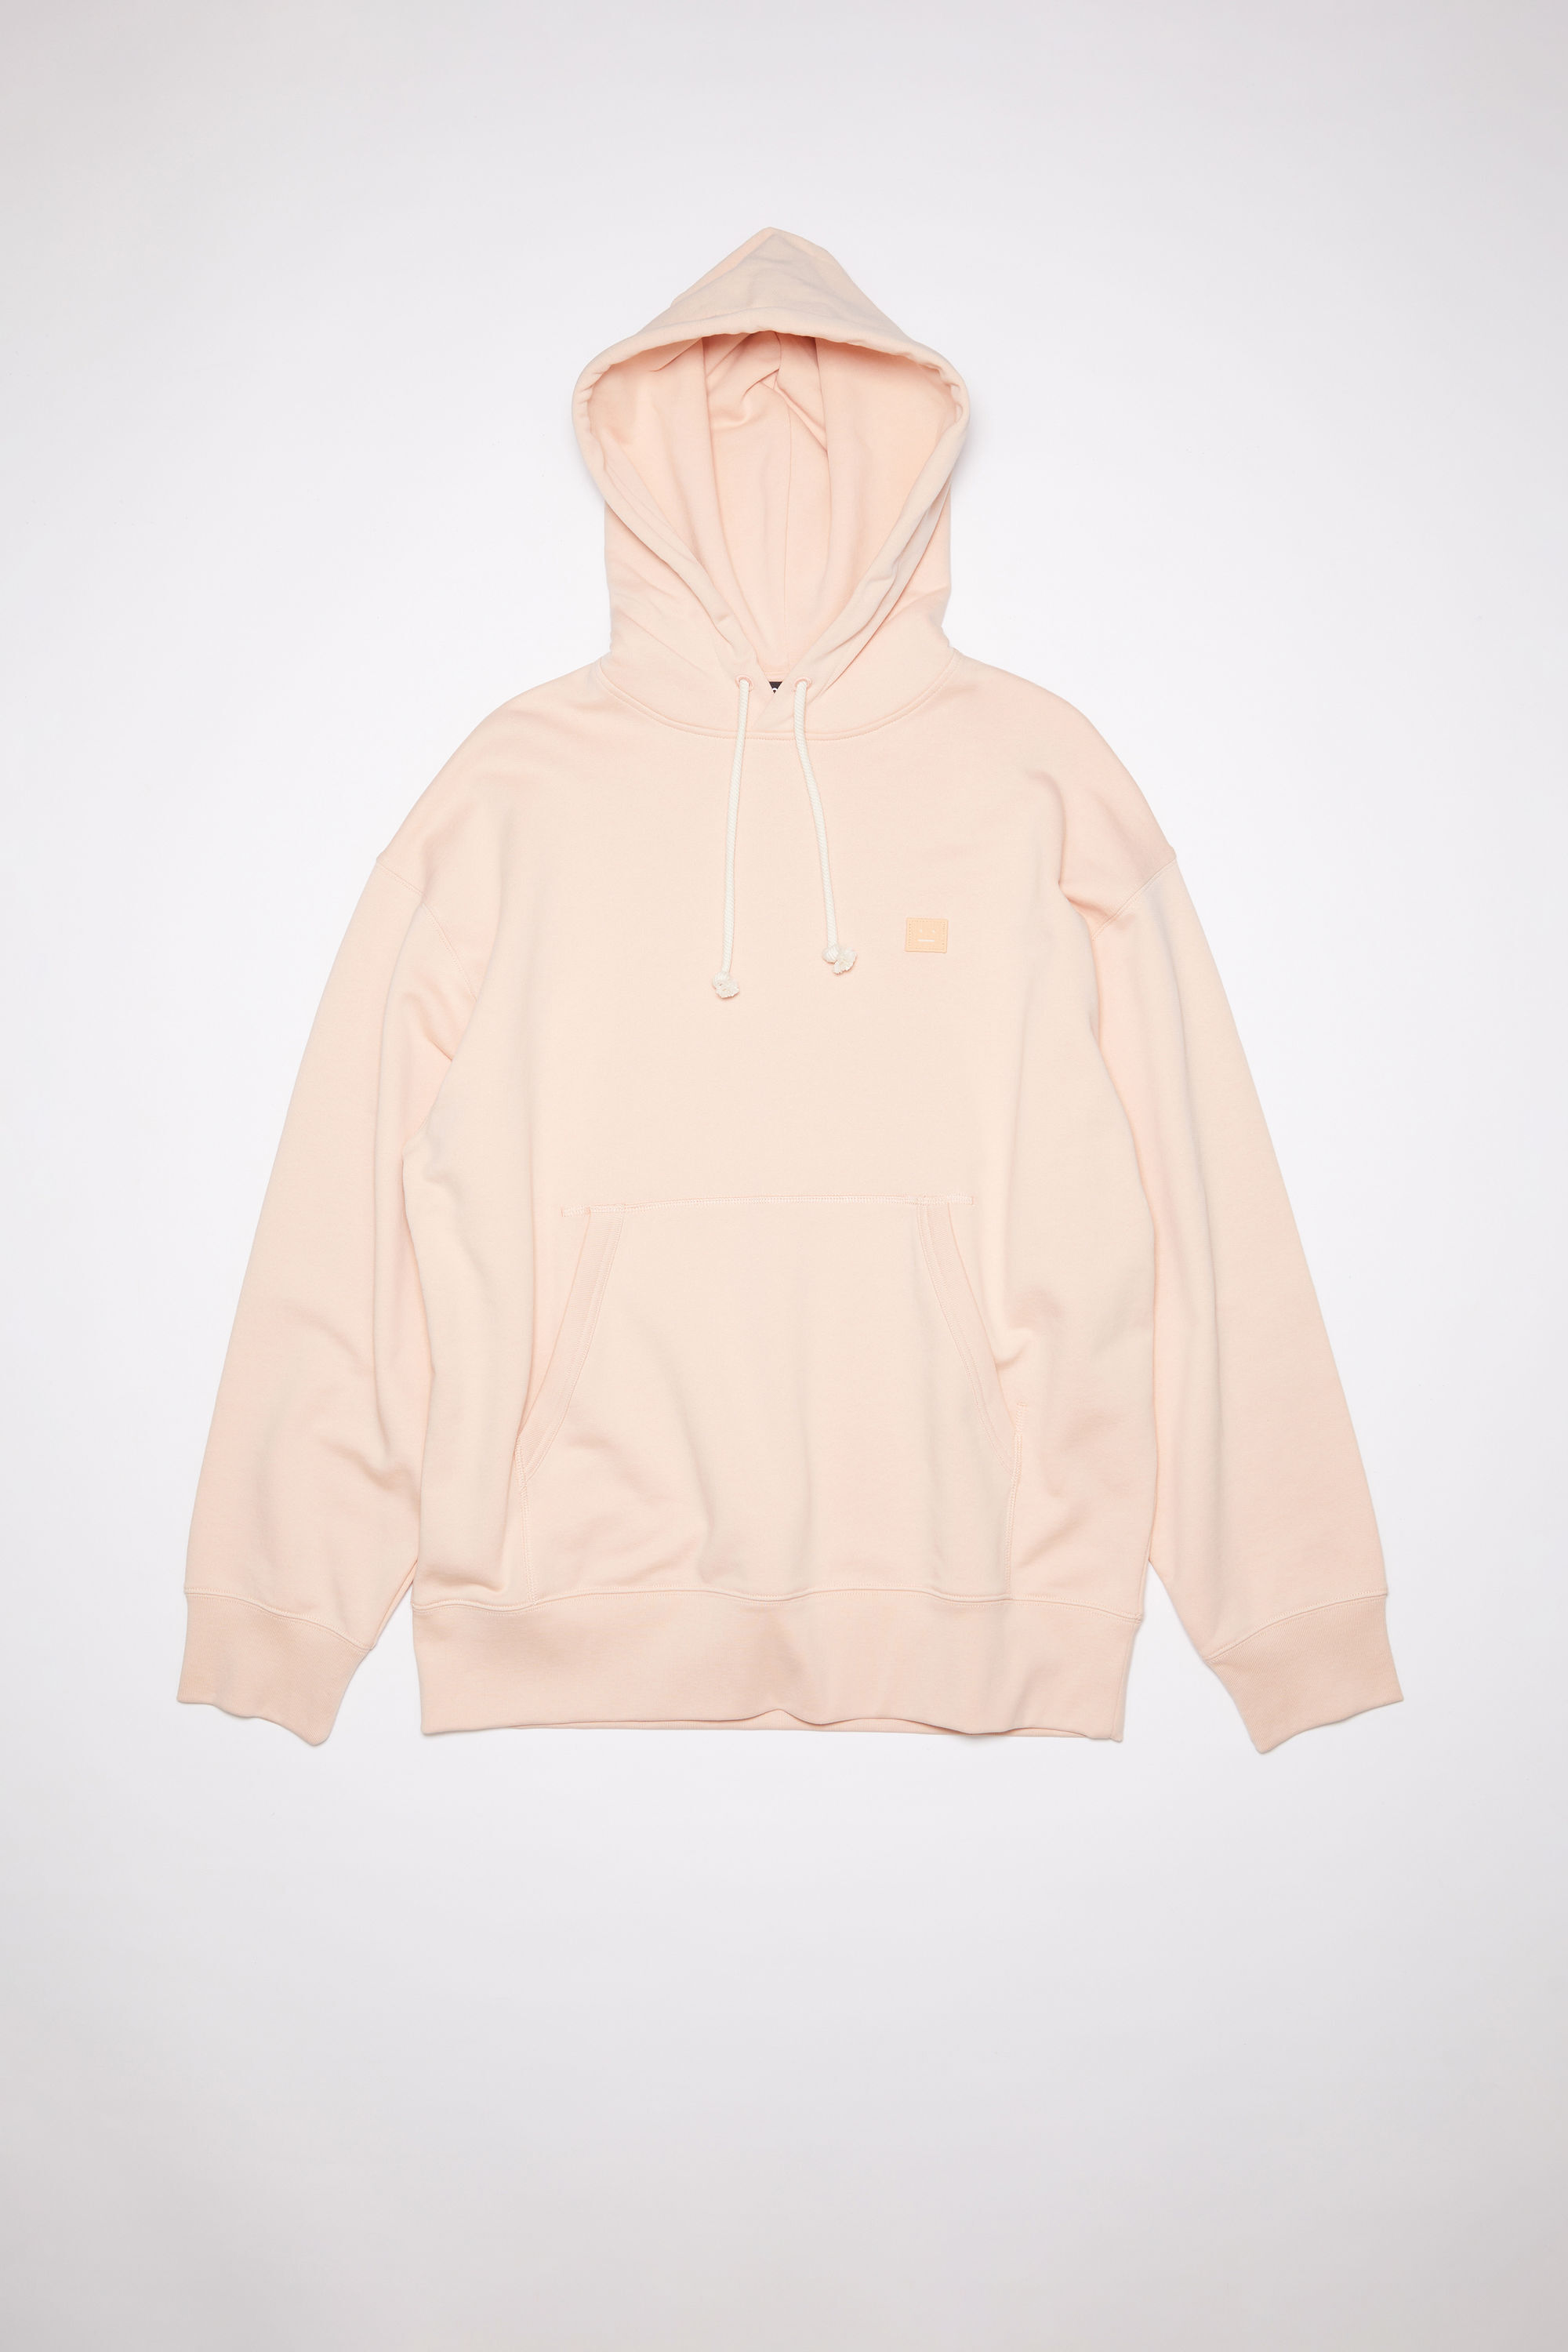 Acne Studios - Hooded sweatshirt - Oversized fit - Powder pink